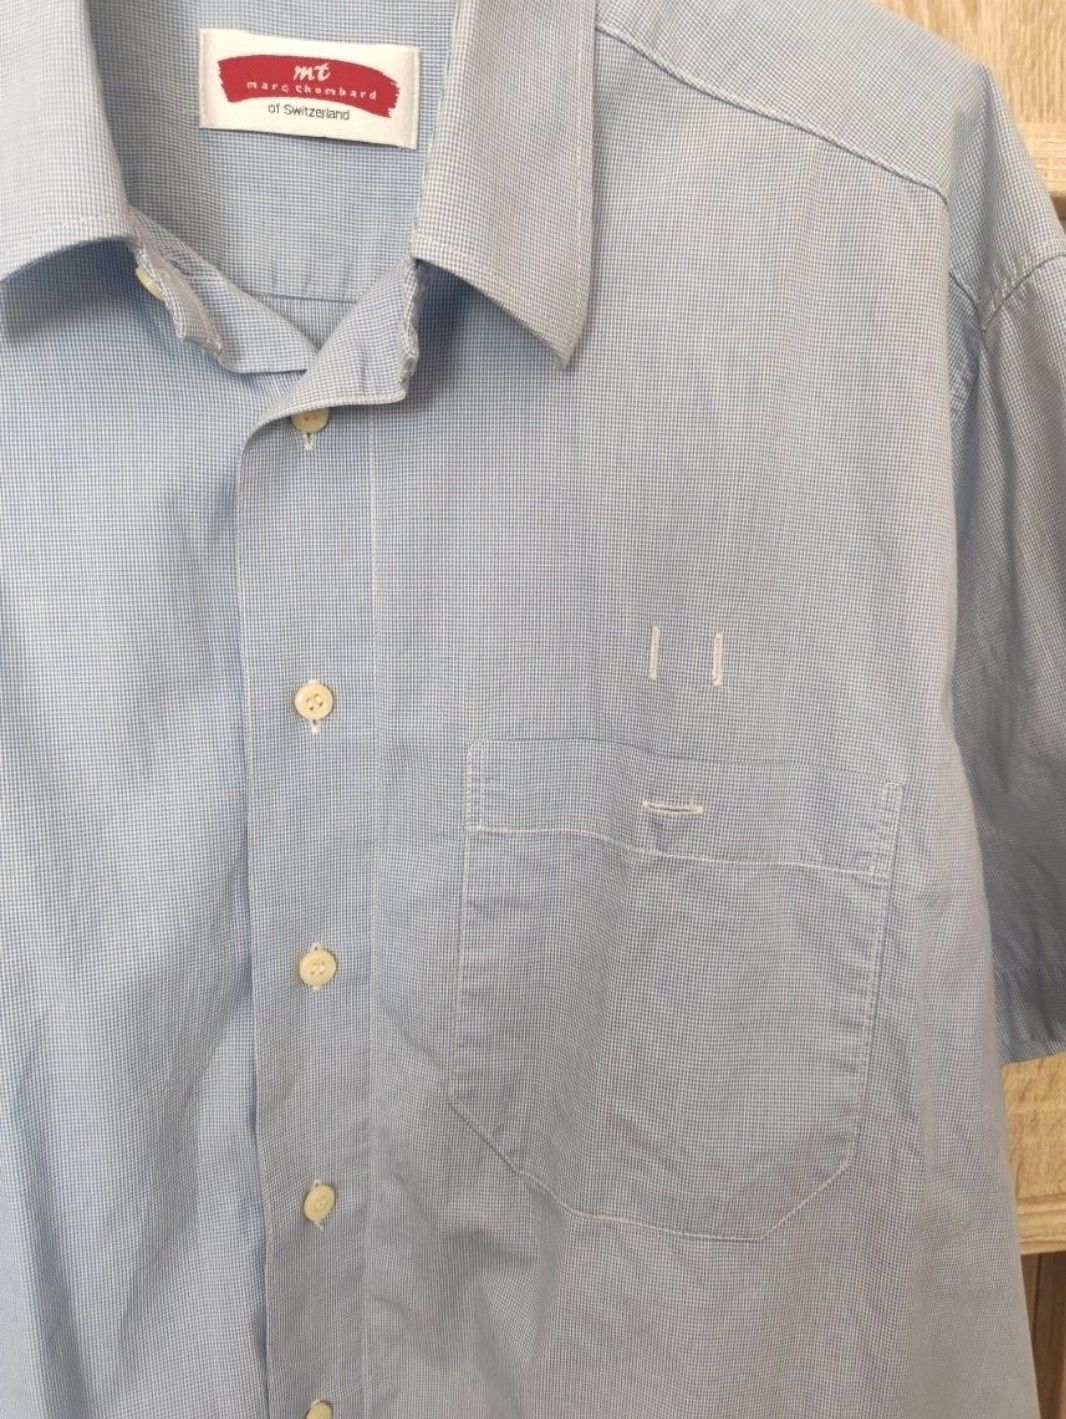 Koszula męska, koszula błękitna z krótkim rękawem roz XL